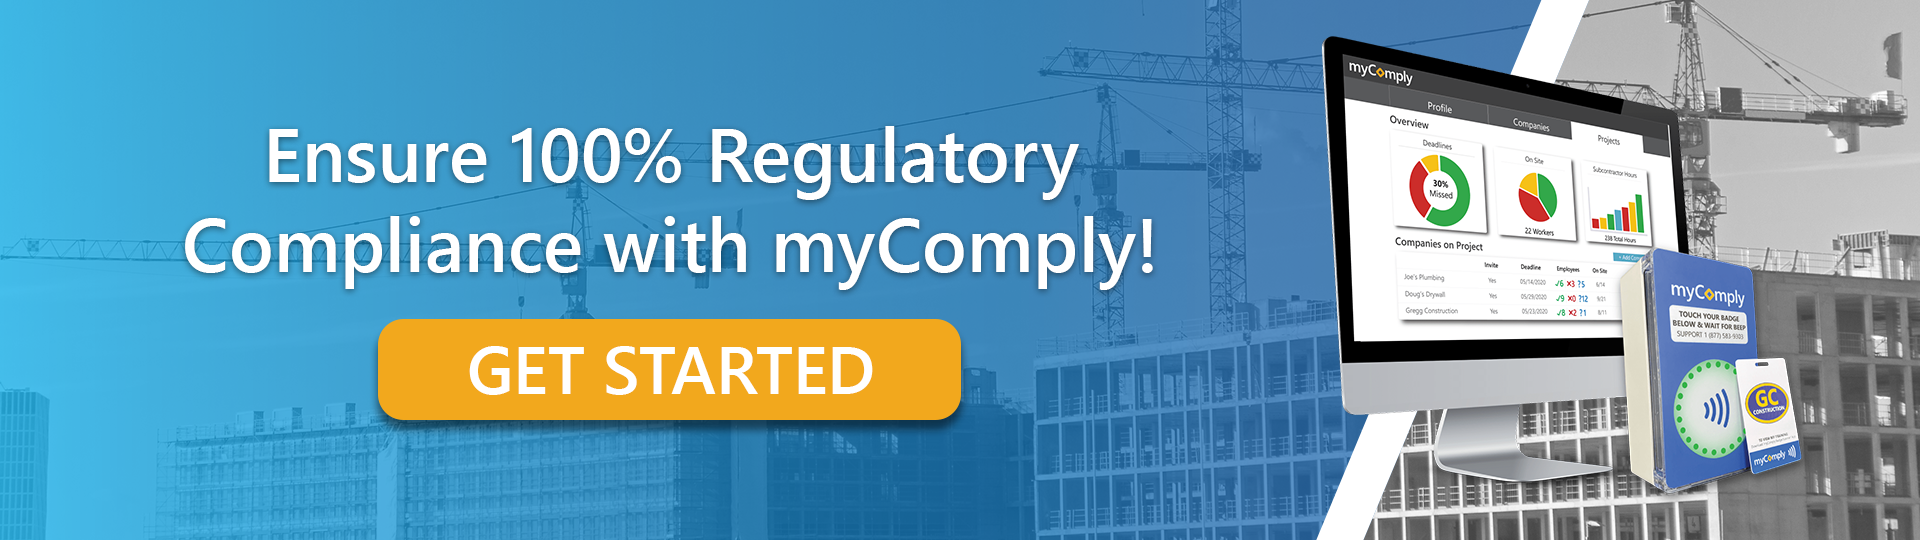 ensure regulatory compliance